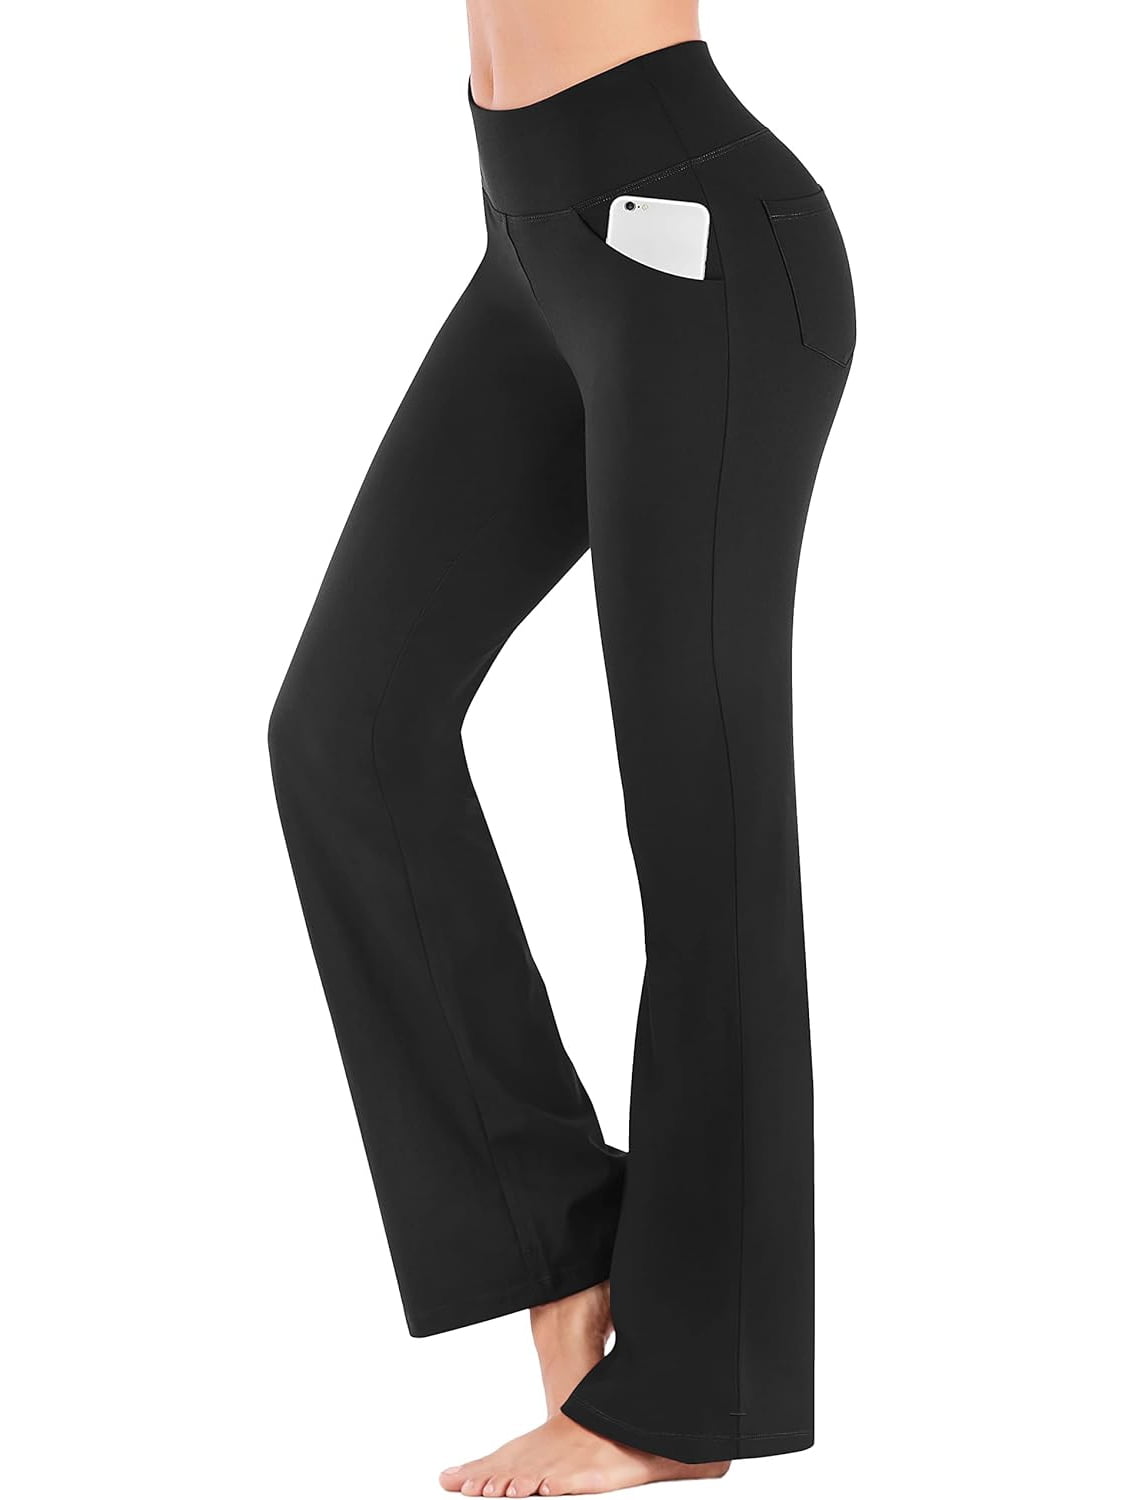 MANIFIQUE Bootcut Yoga Pants with Pockets for Women Wide Leg Pants